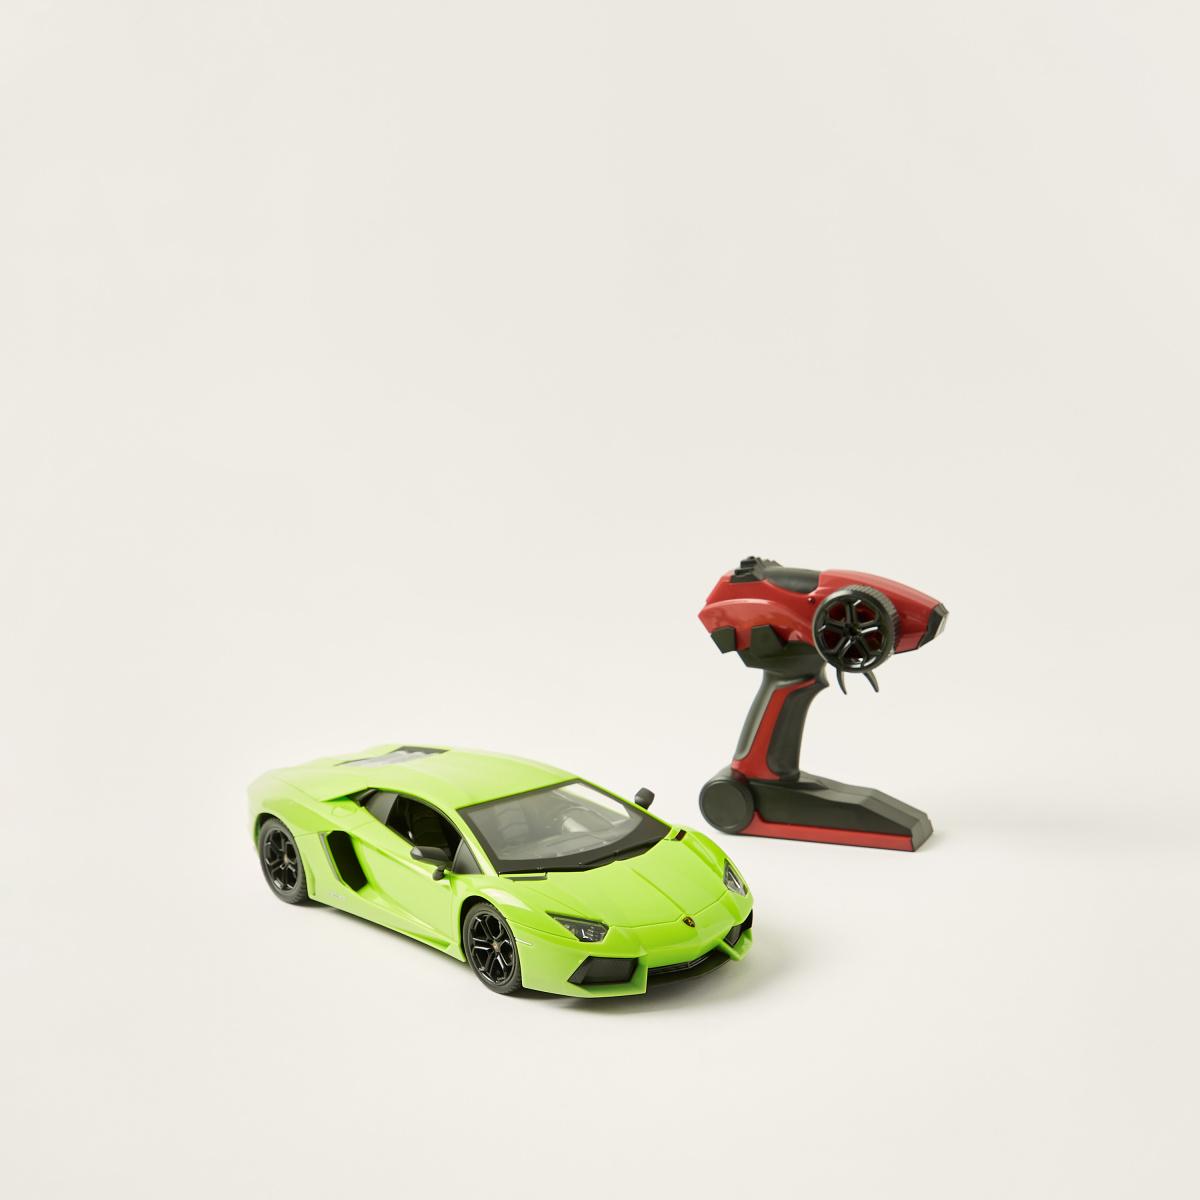 Rw Remote Controlled 1:14 Lamborghini Toy Car Playset